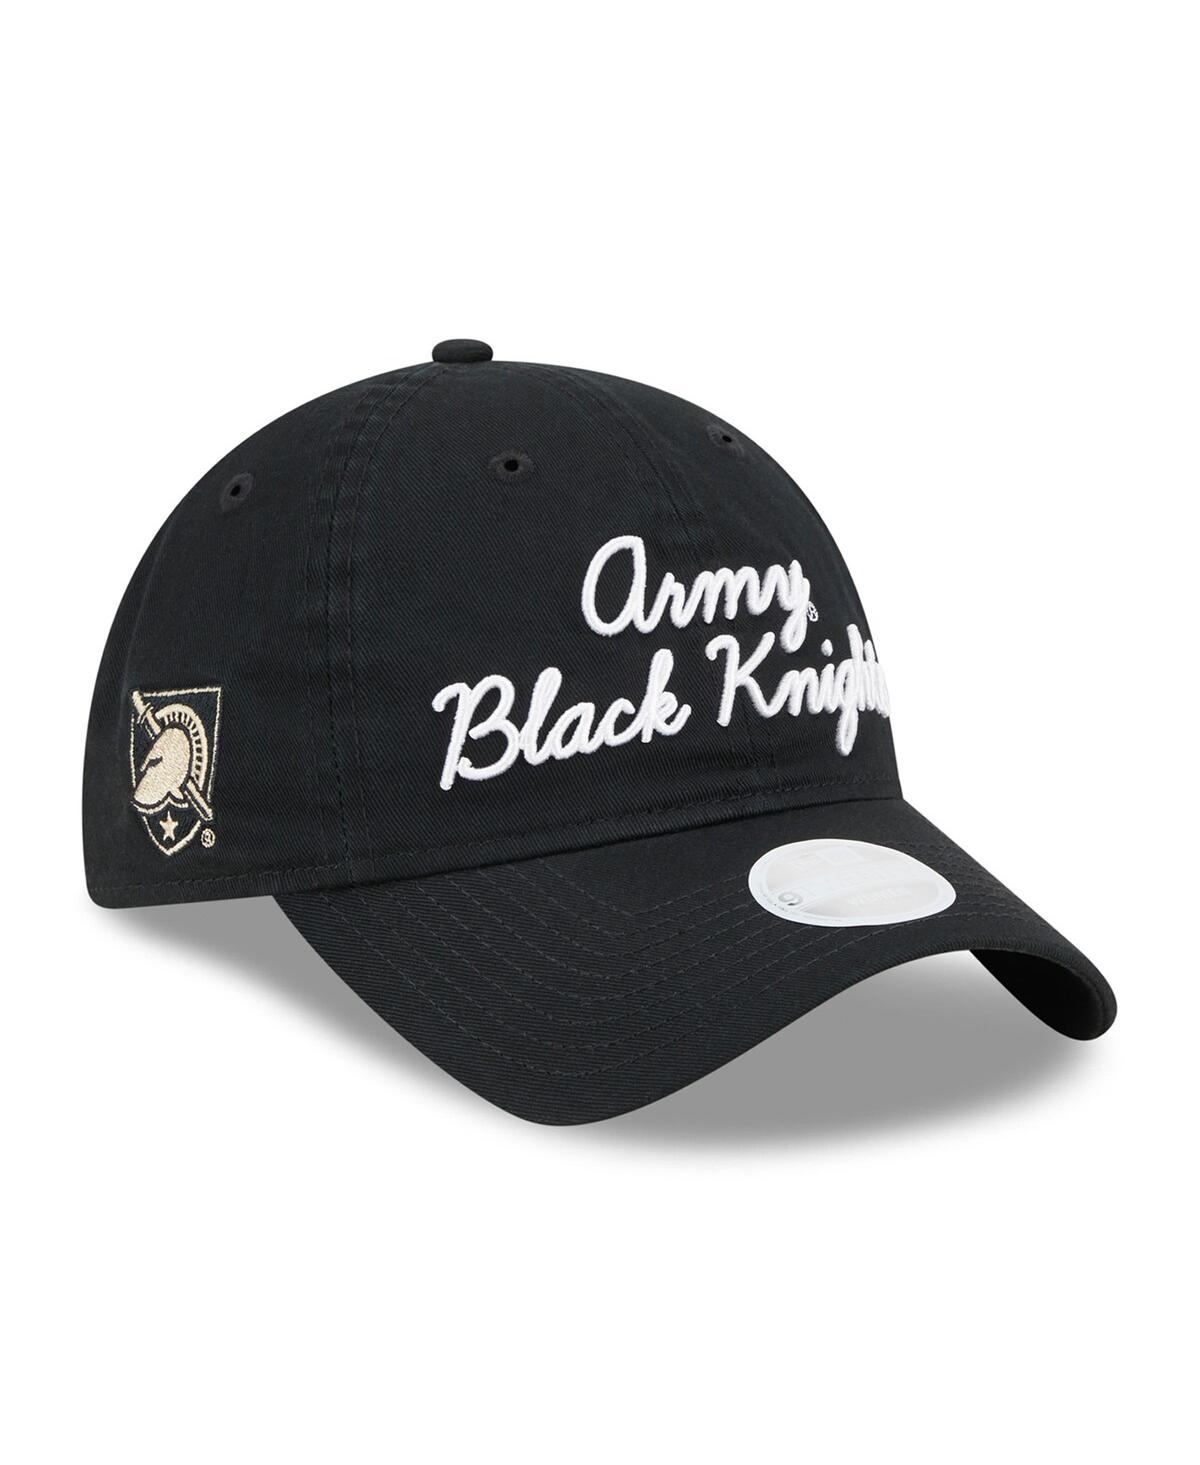 Women's New Era Black Army Black Knights Script 9TWENTY Adjustable Hat - Black